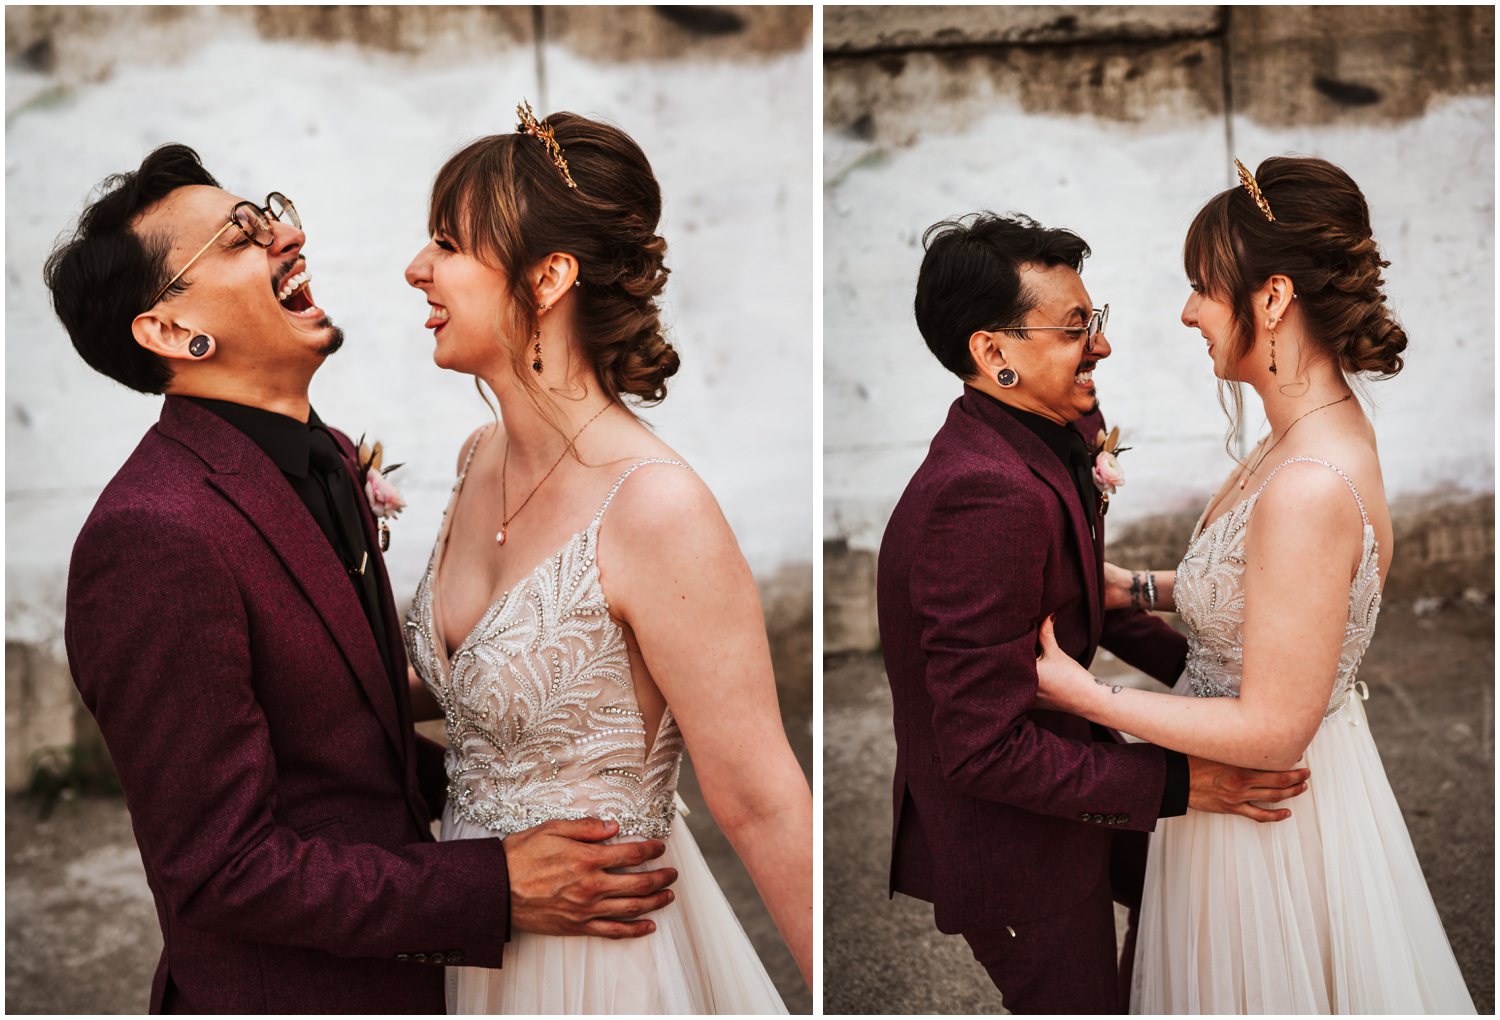 Ovation Chicago Wedding Photos - crazy bride and groom